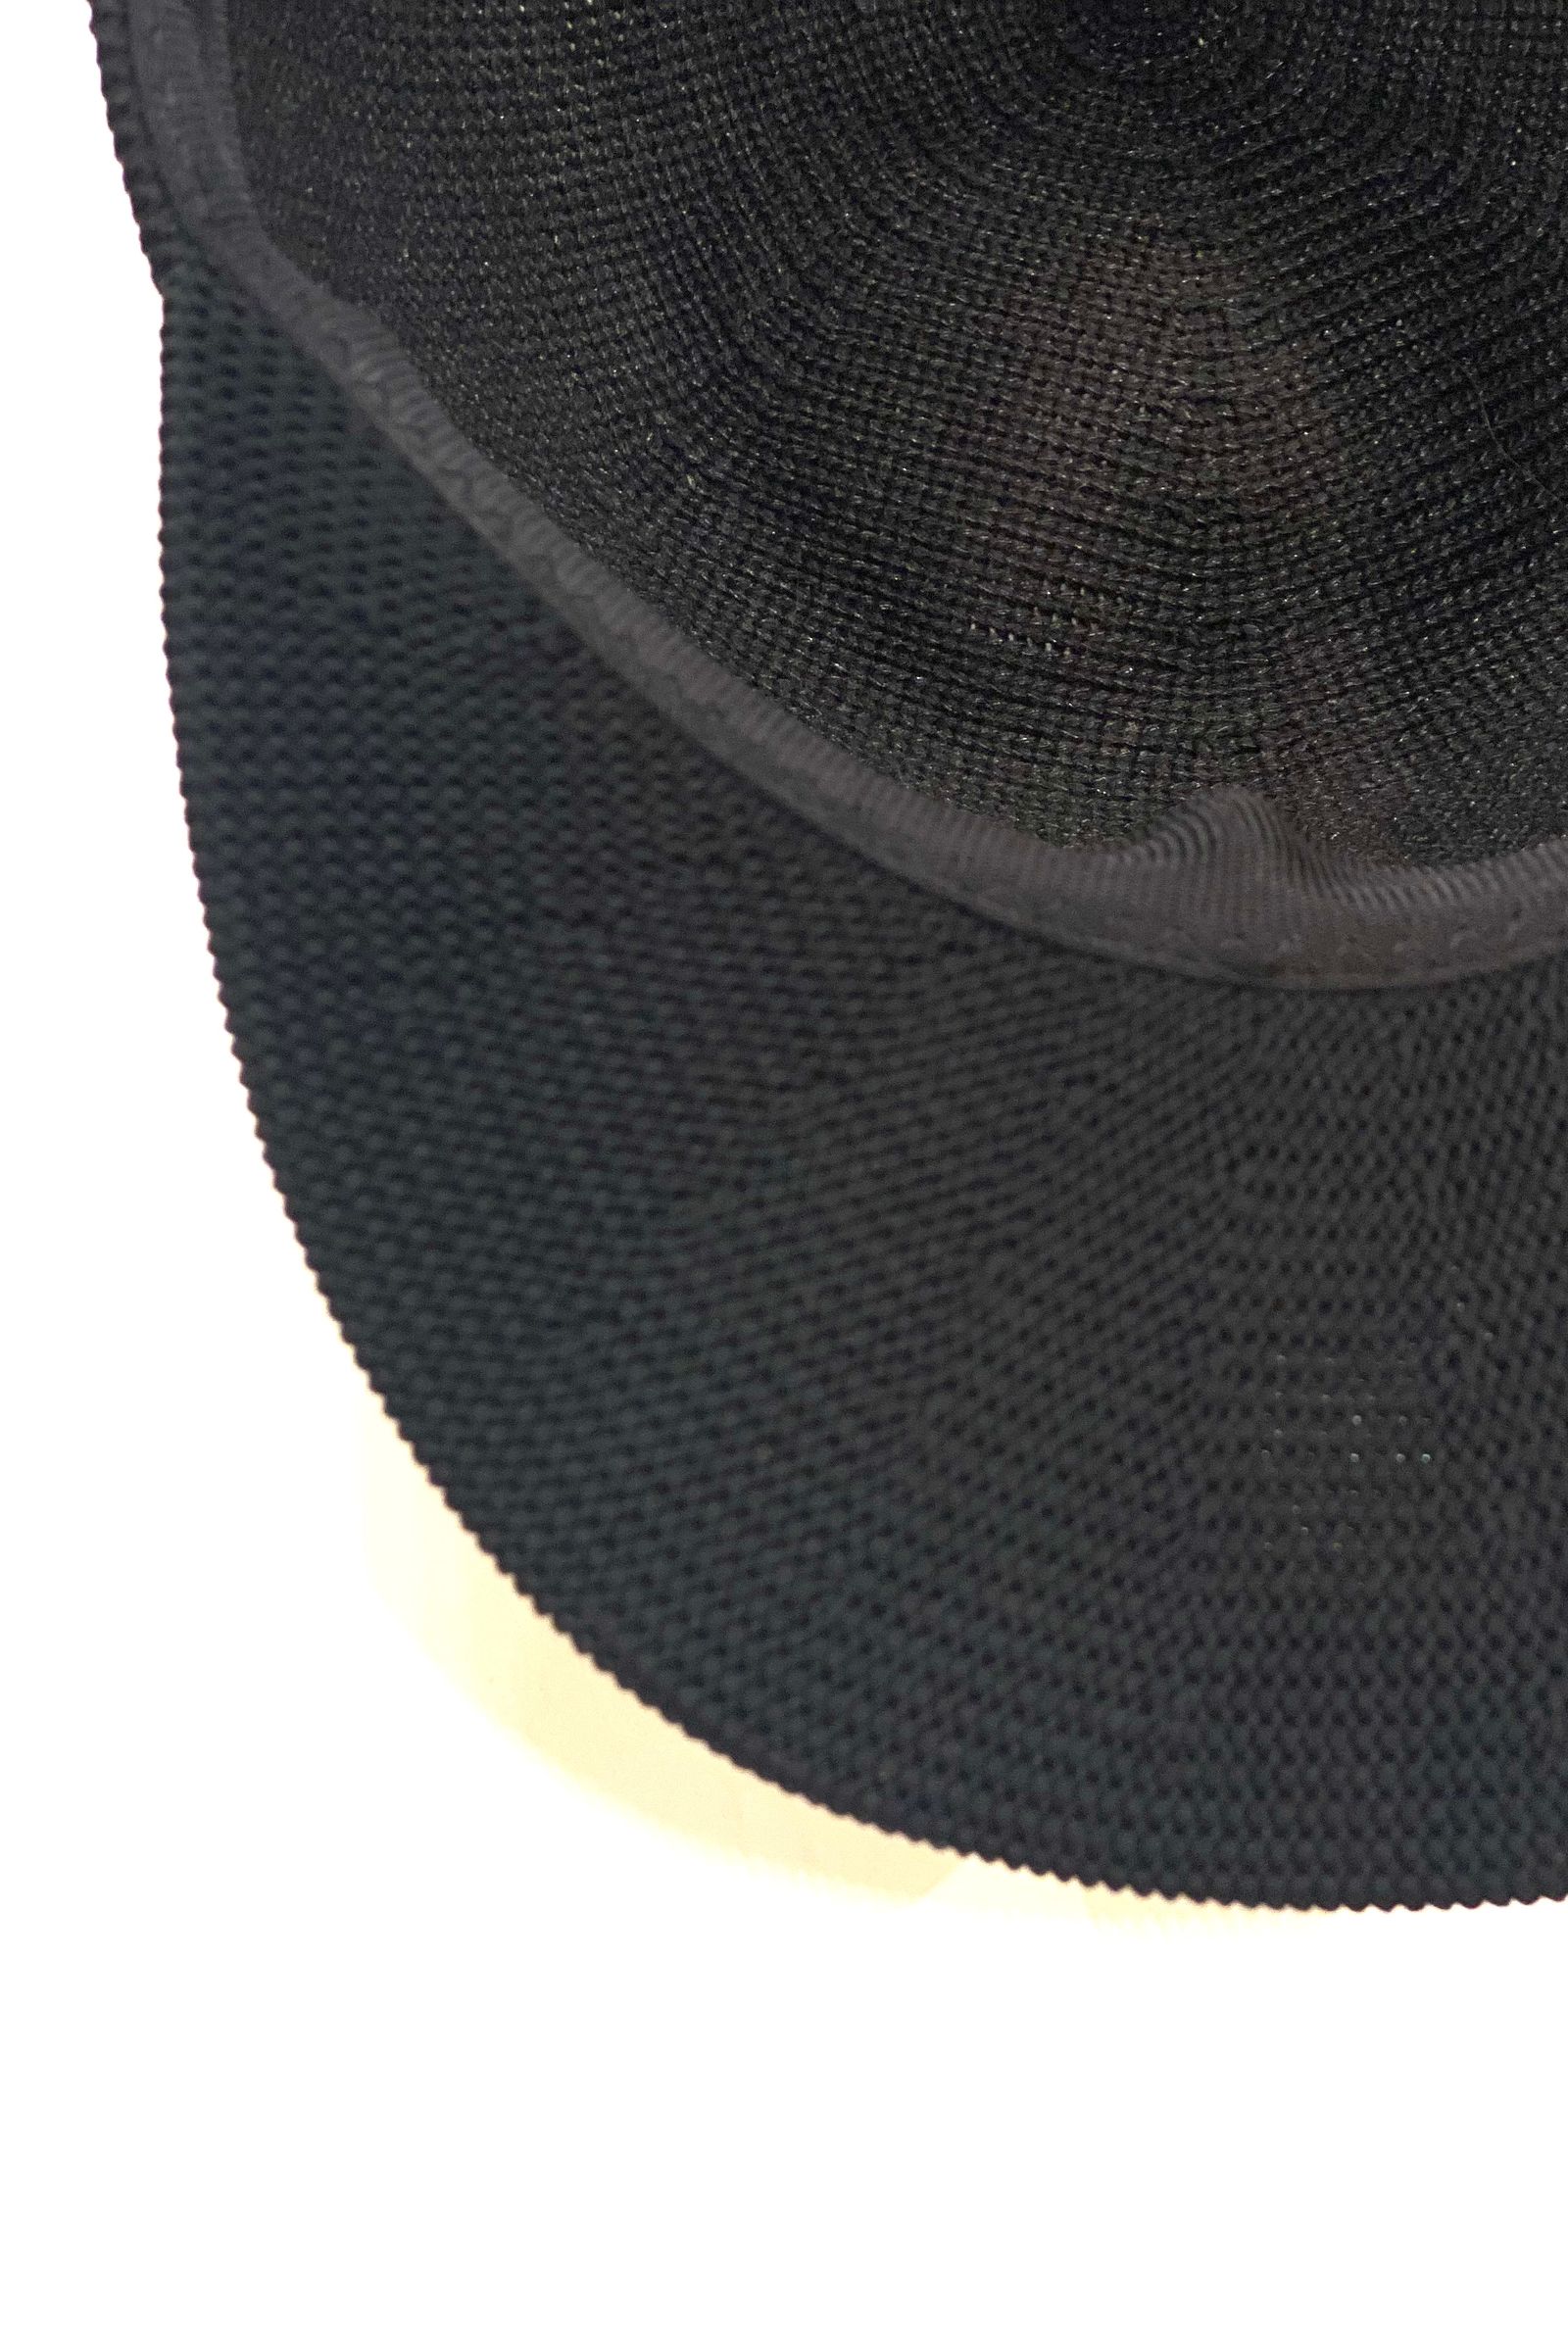 CFCL - mesh knit cap 1 -black- unisex | asterisk